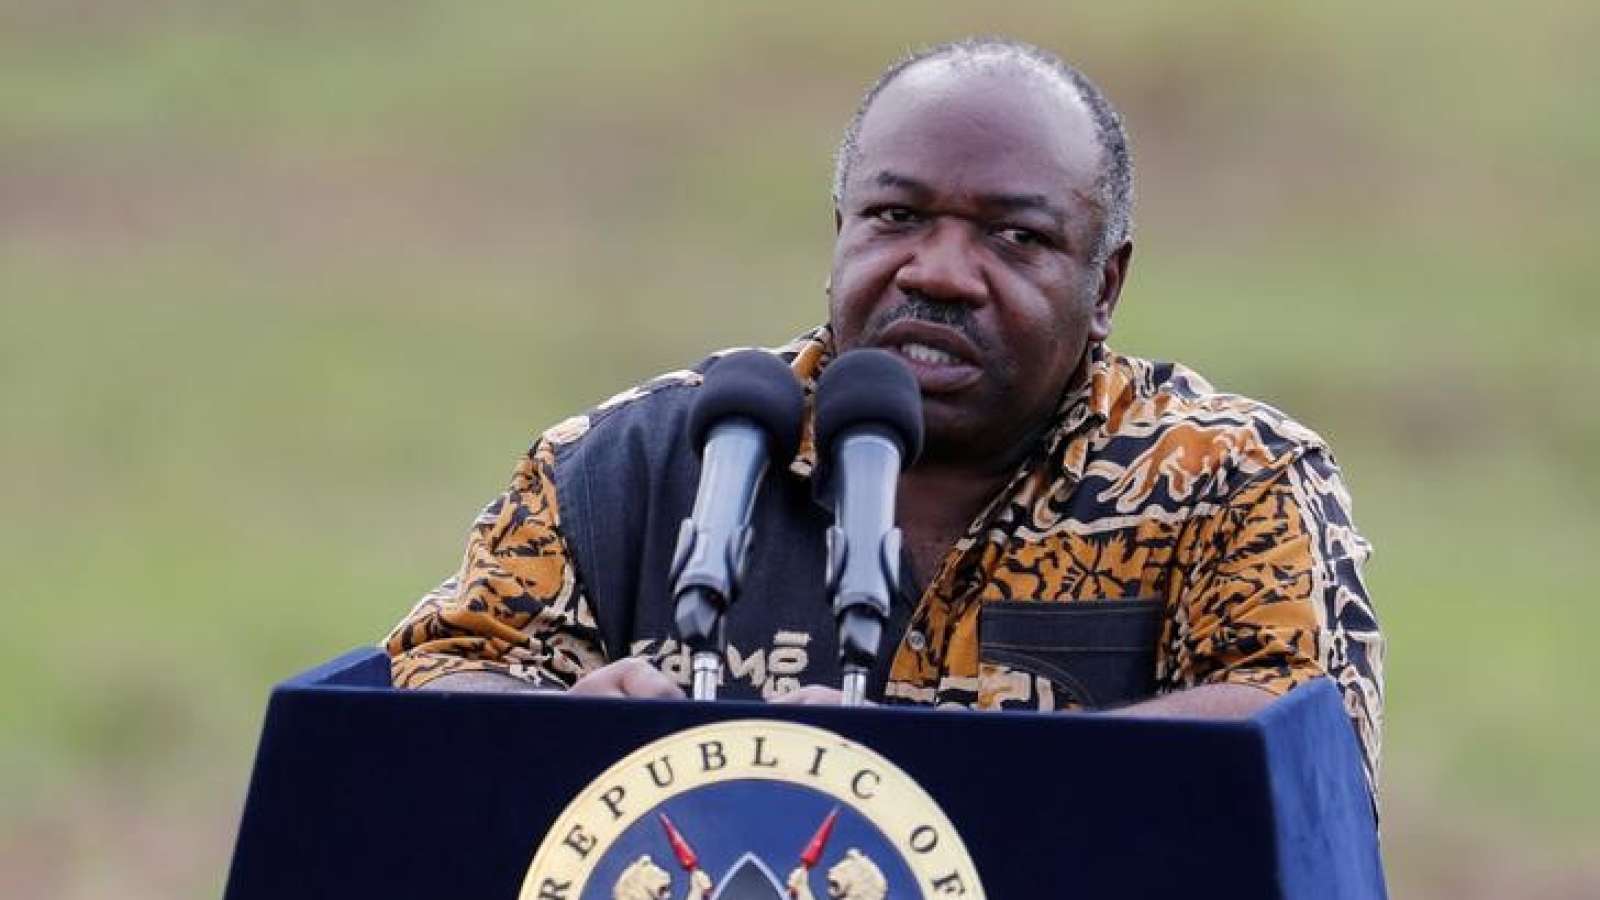 Gabon's President Ali Bongo